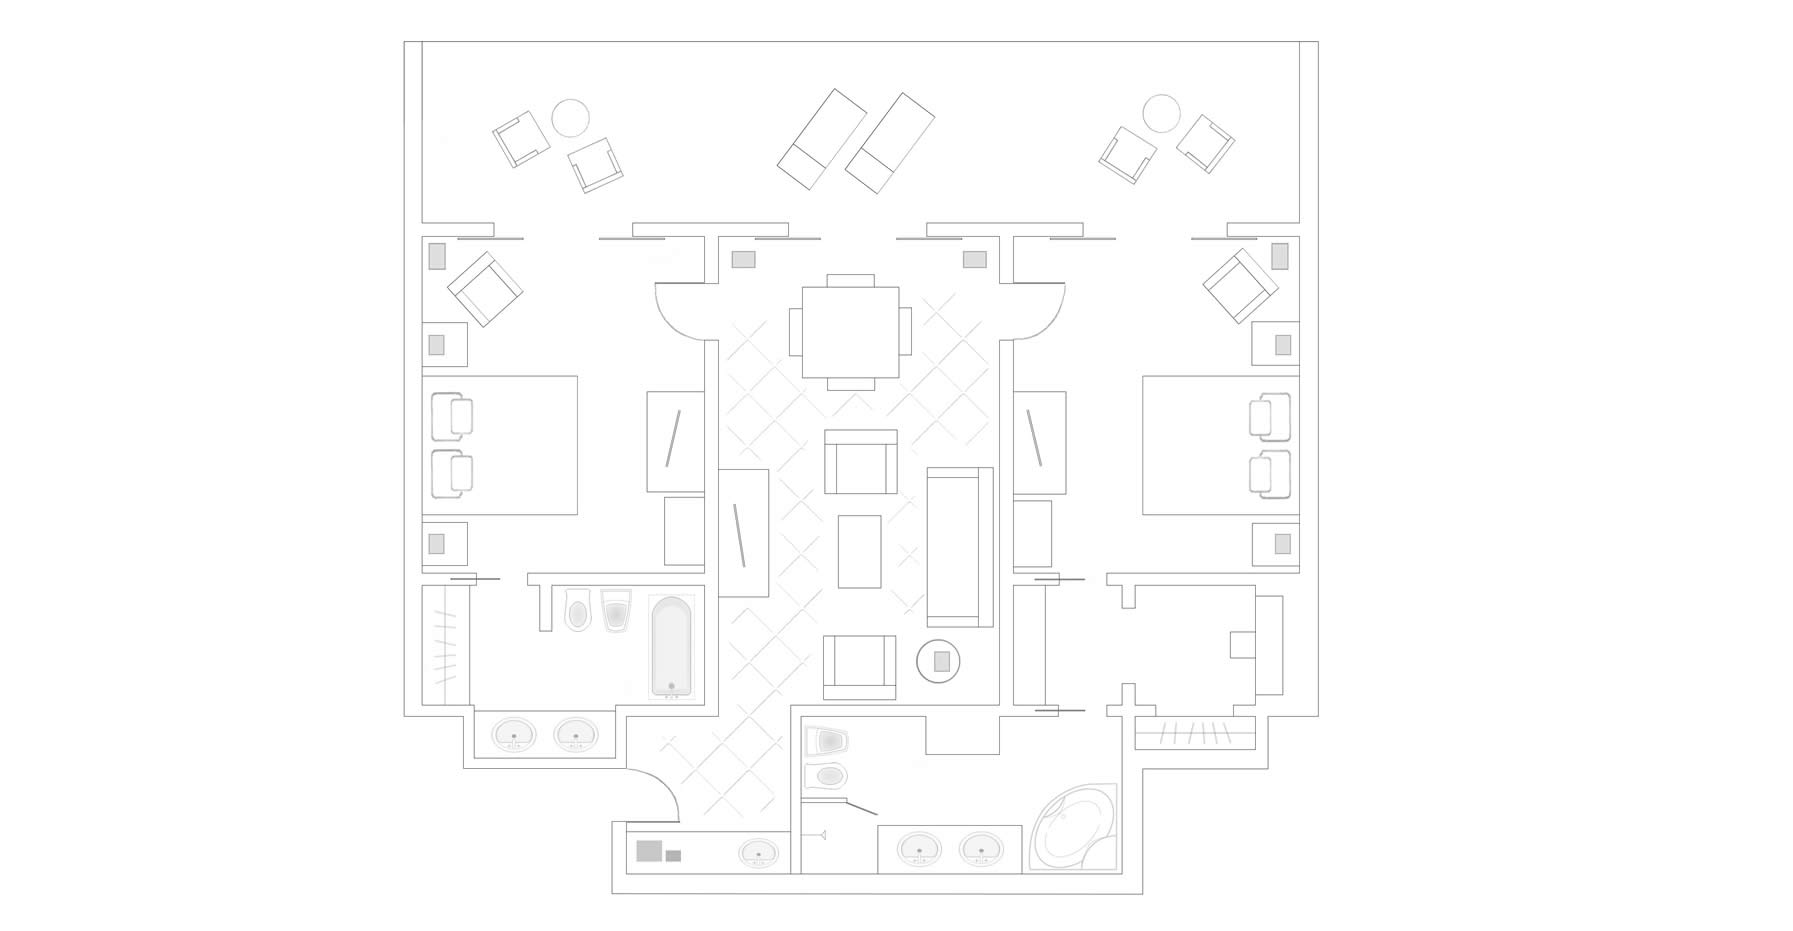 Deluxe Two Bedroom Suite layout